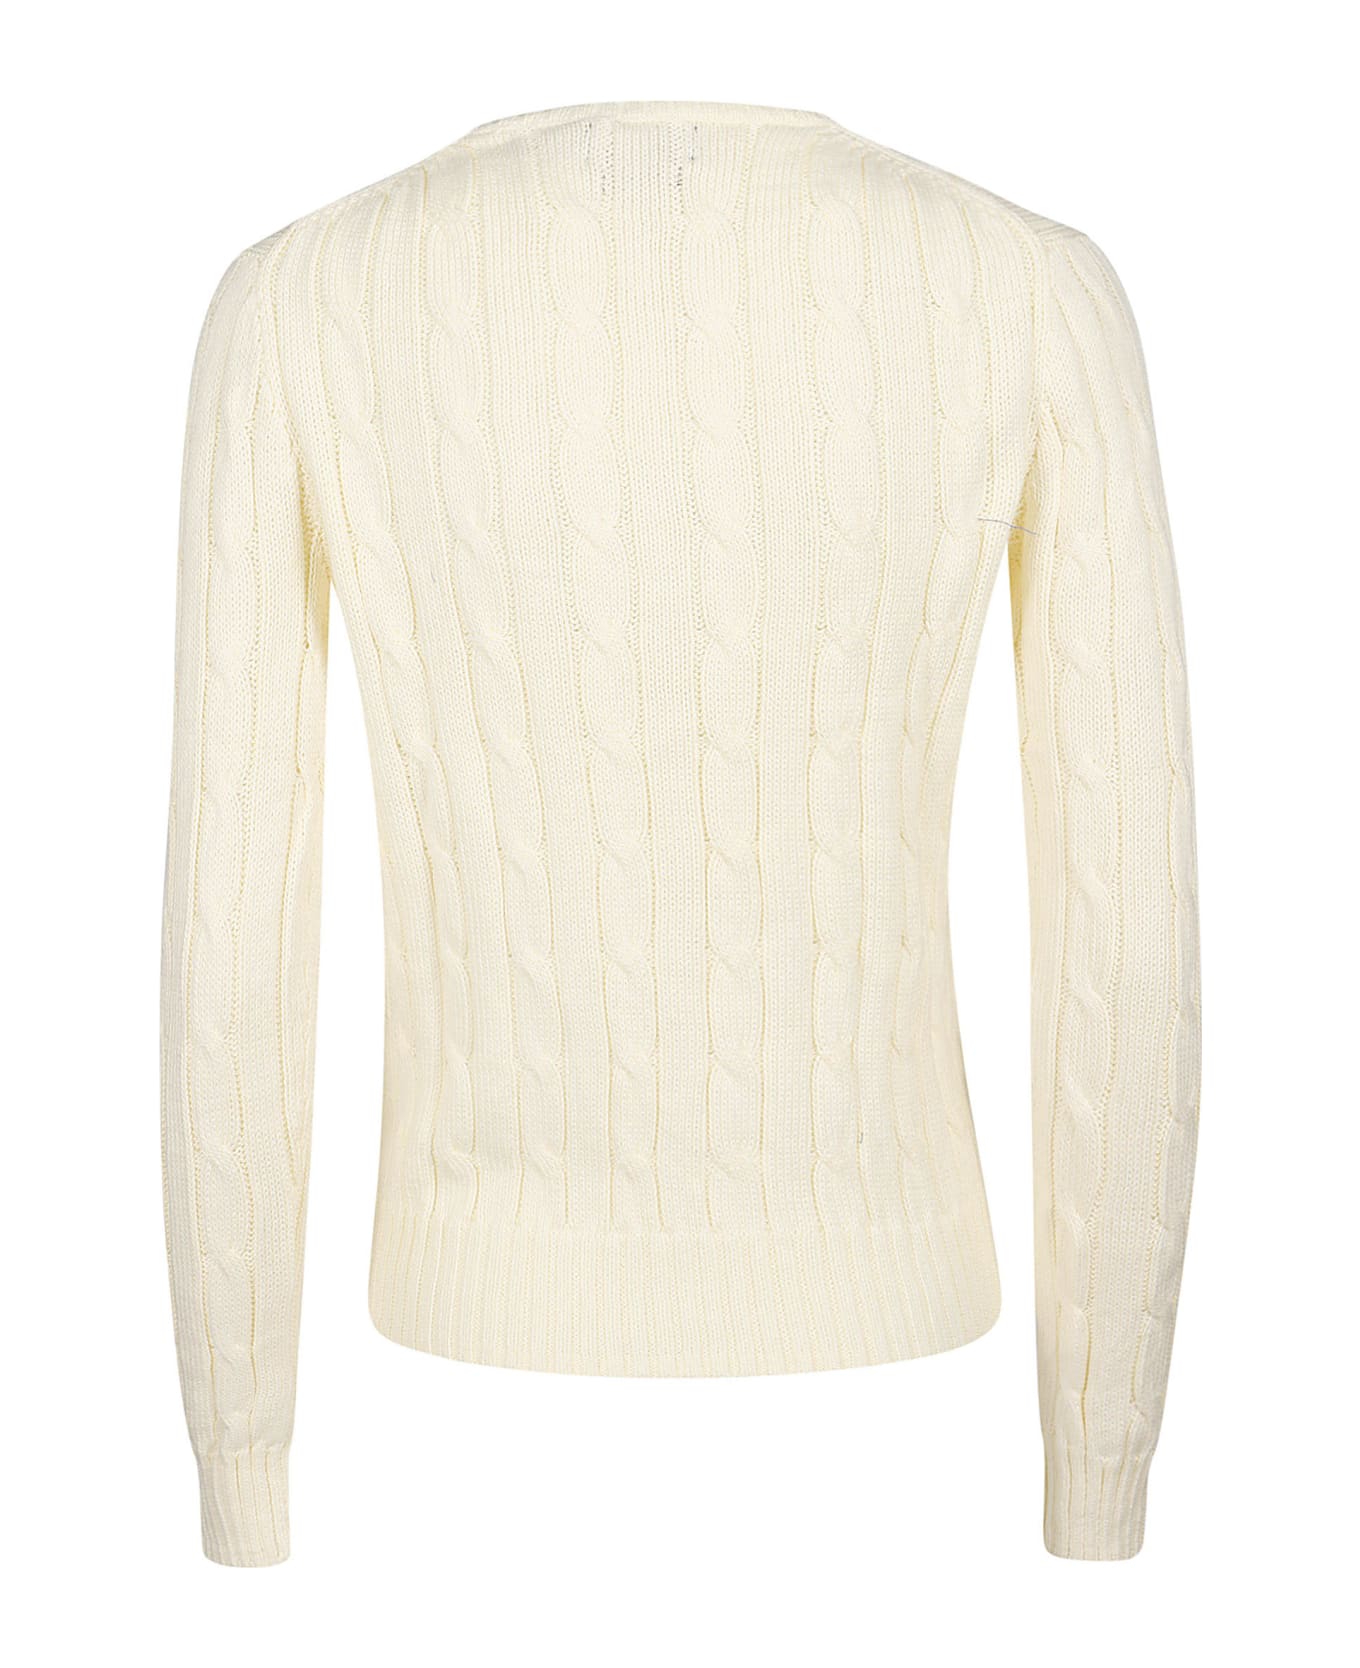 Polo Ralph Lauren Julianna Sweater - Cream